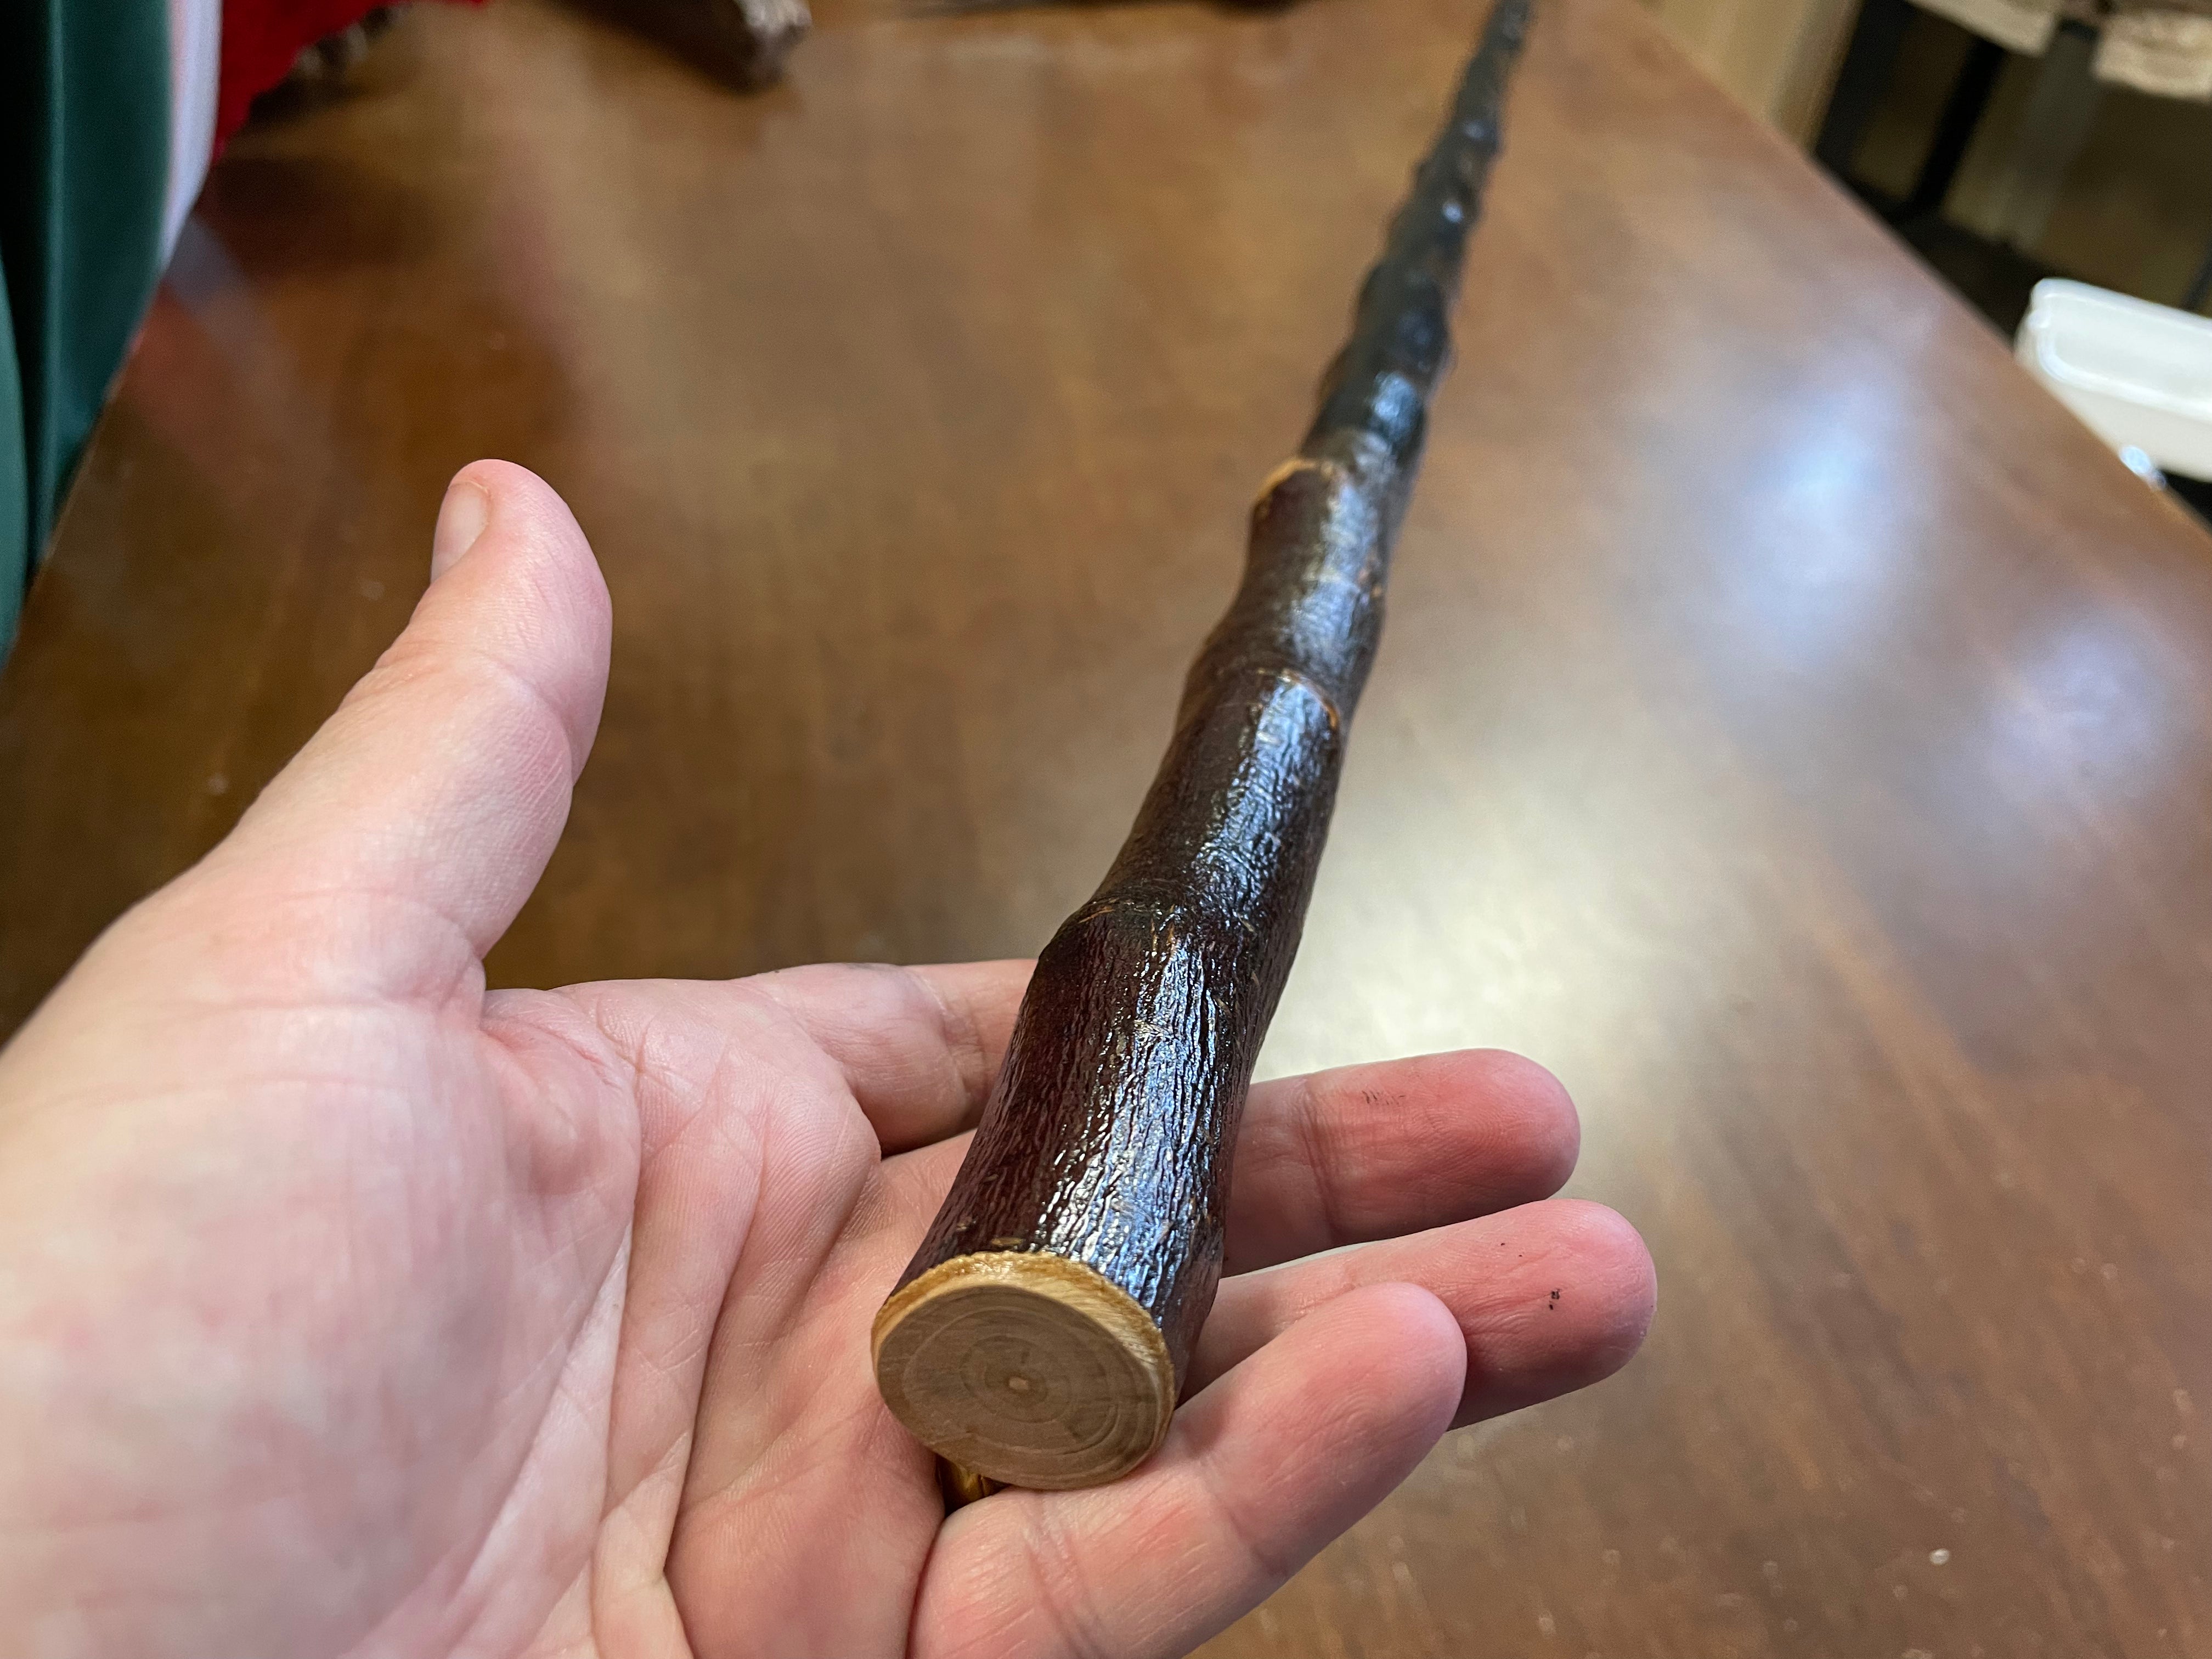 Blackthorn Hiking Stick - 54 inch - Handmade in Ireland